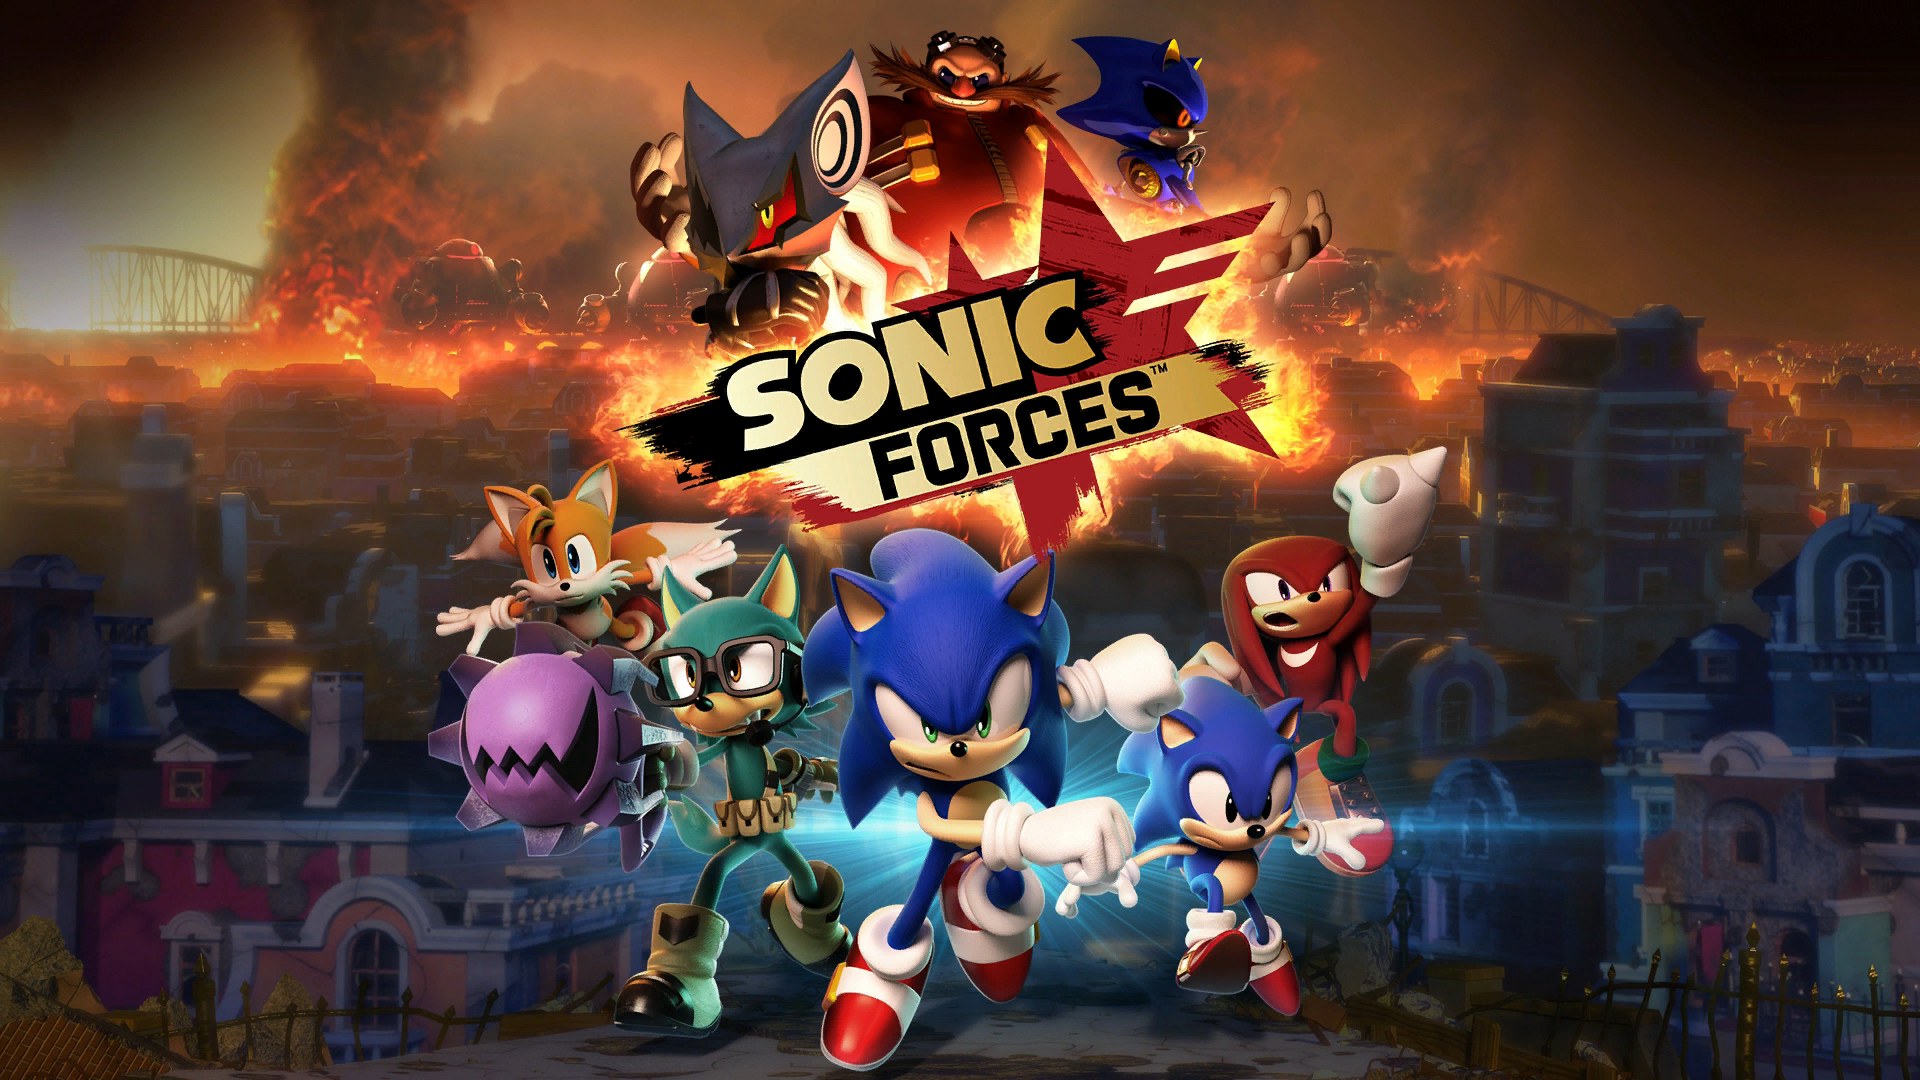 Sonic-Forces-Screenshot-2017-11-08-21-21-11.png